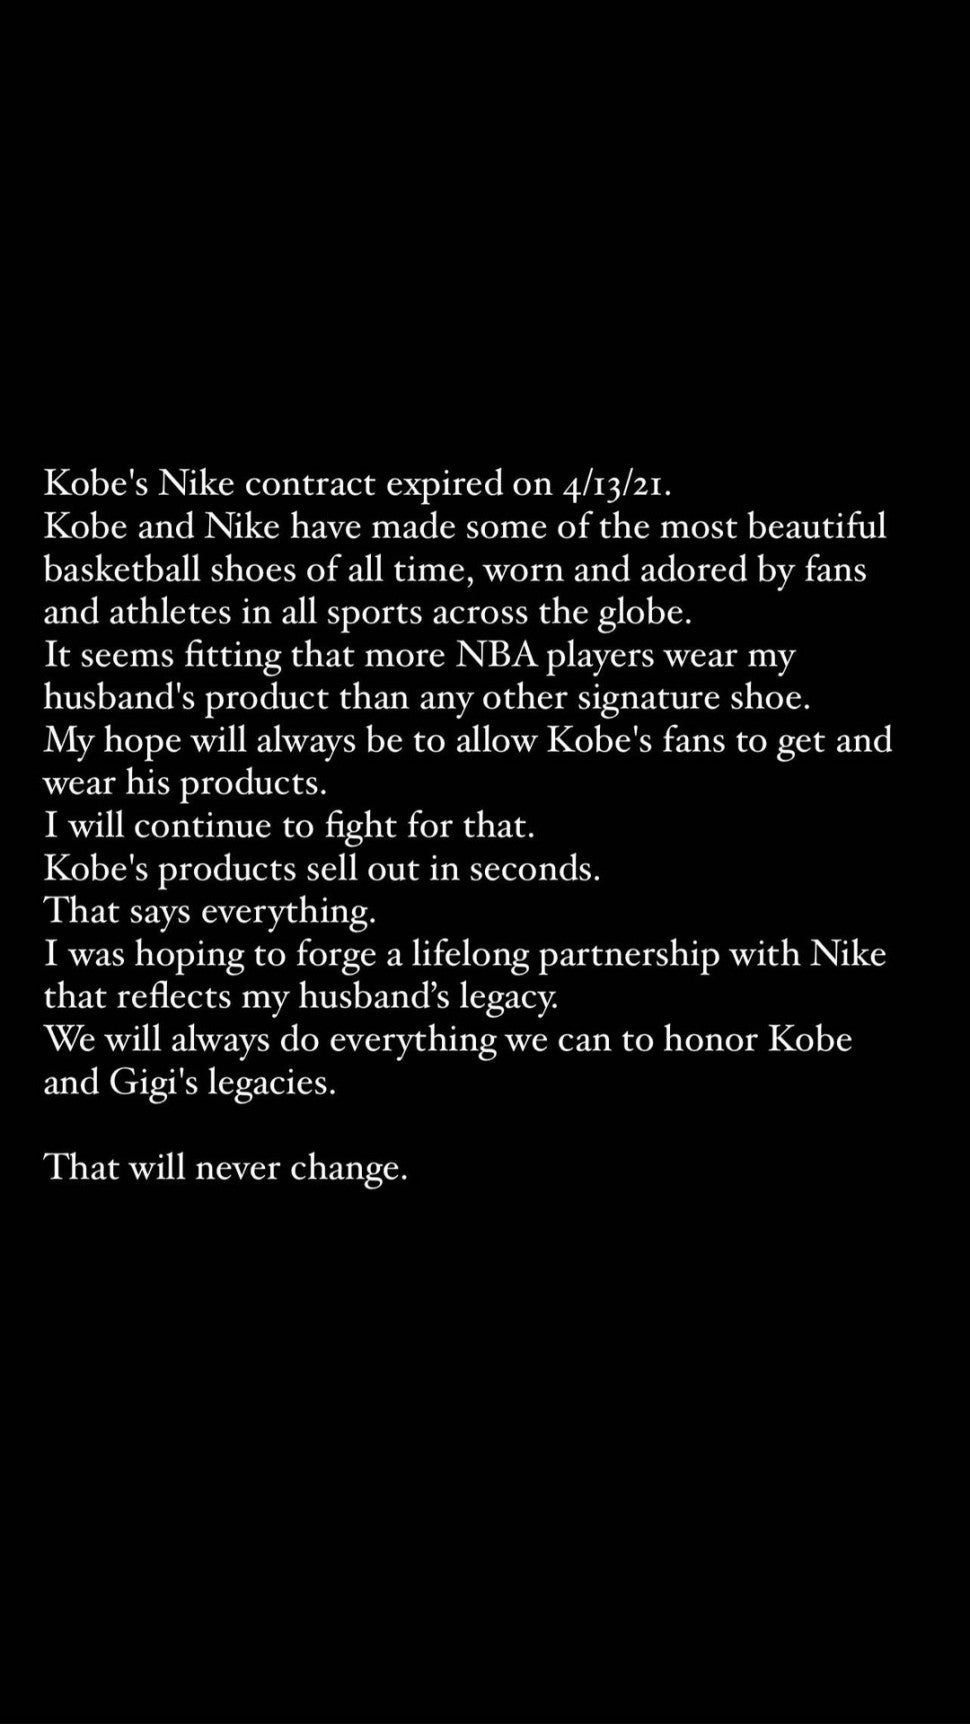 Vanessa Bryant's statement on Kobe Bryant and Nike partnership ending